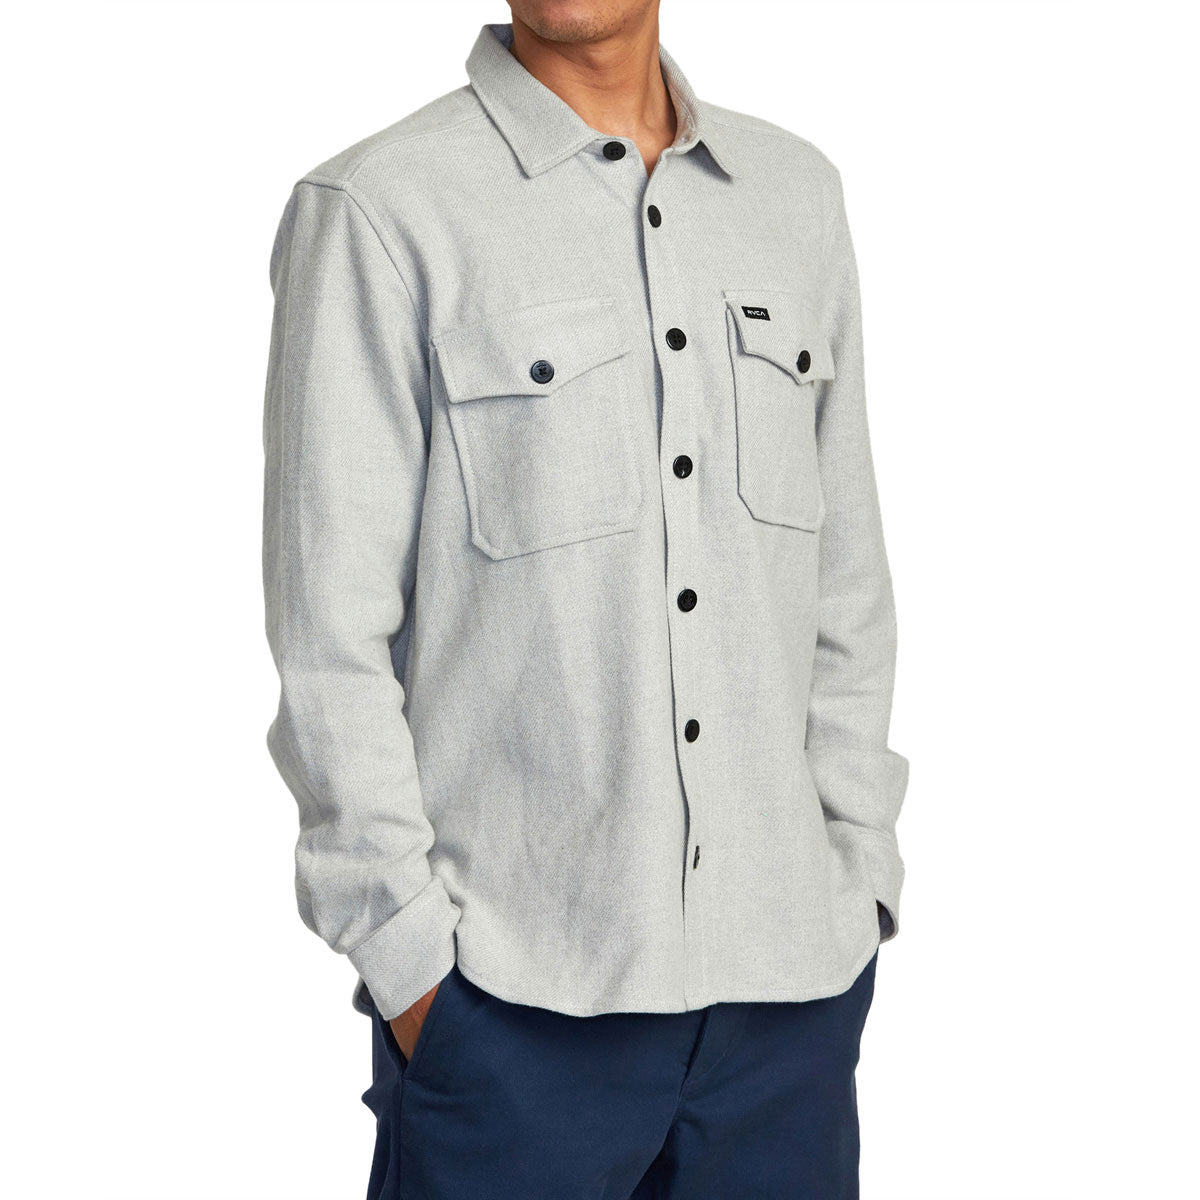 RVCA Va Cpo Long Sleeve Shirt - Grey Marle image 4